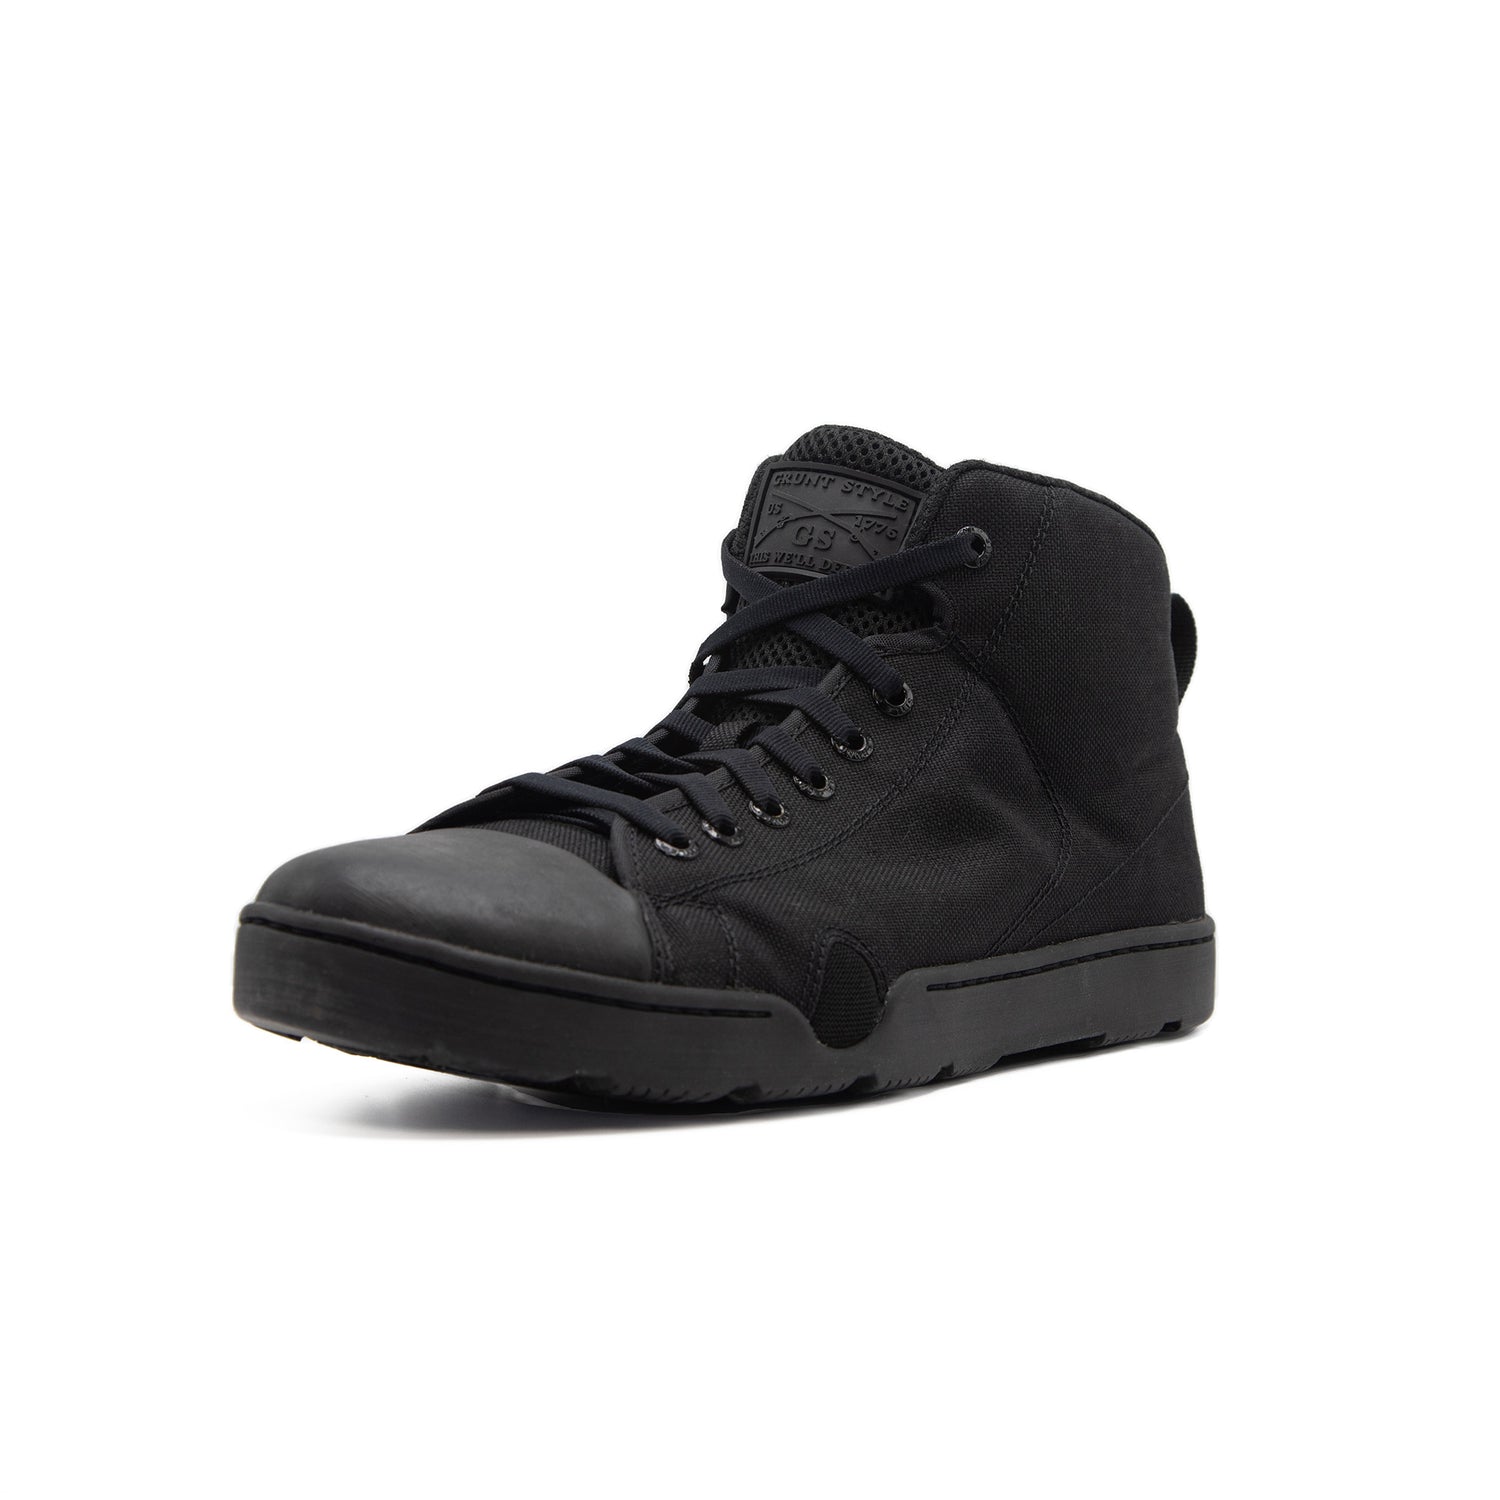  Tactical Shoes - Boots - Black